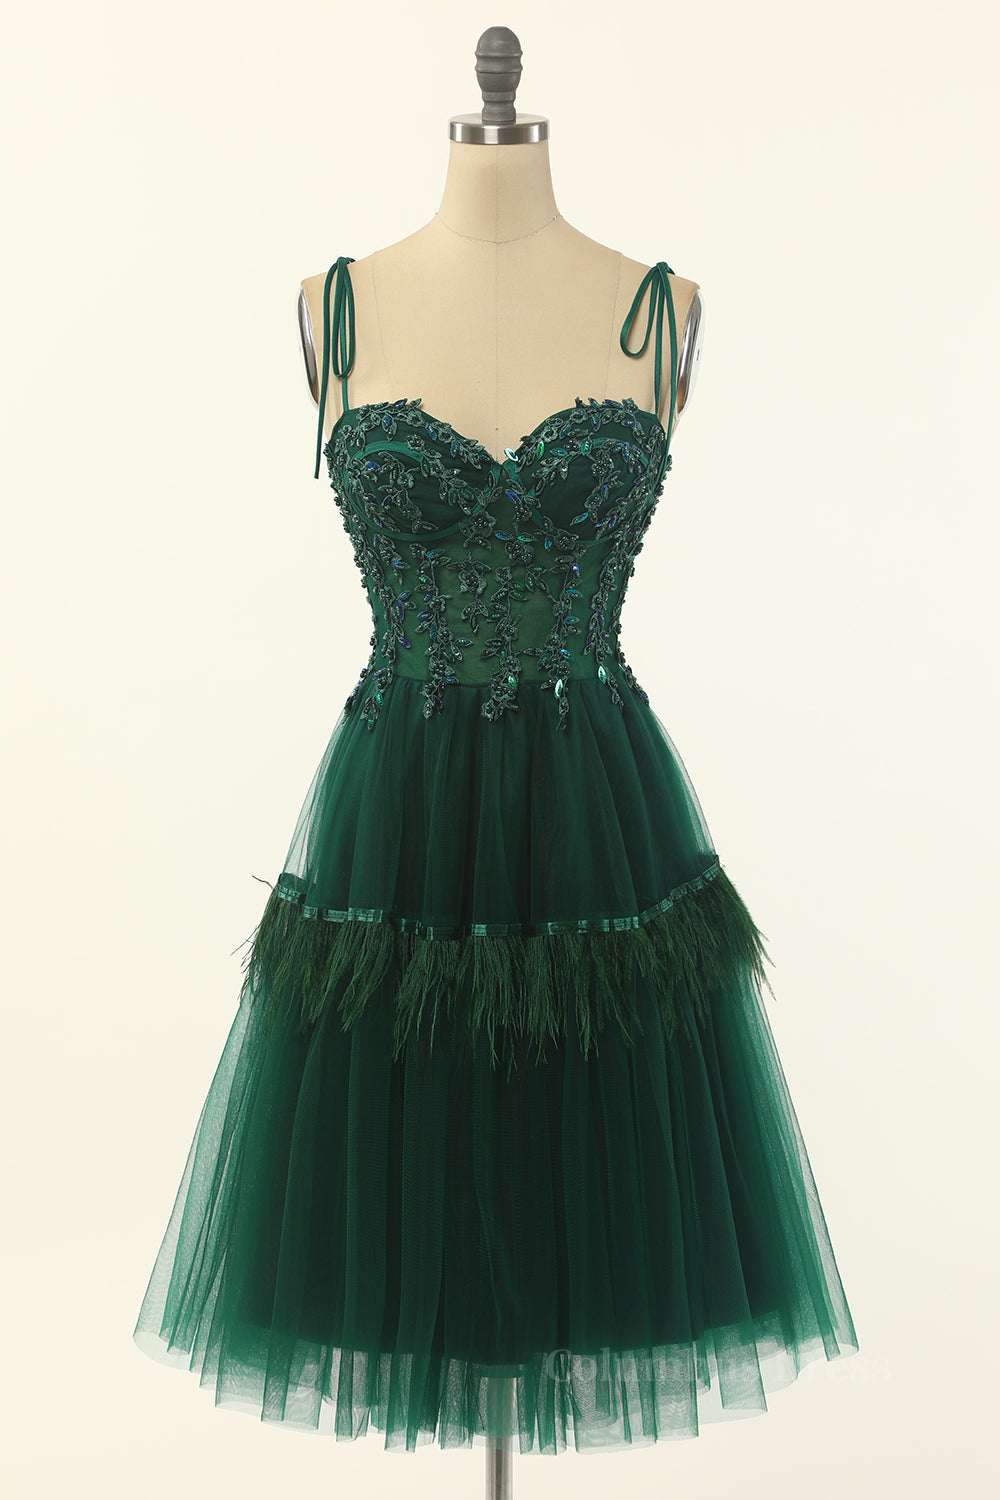 Bridesmaids Dresses Blush, Dark Green A-line Short Tulle Party Dress